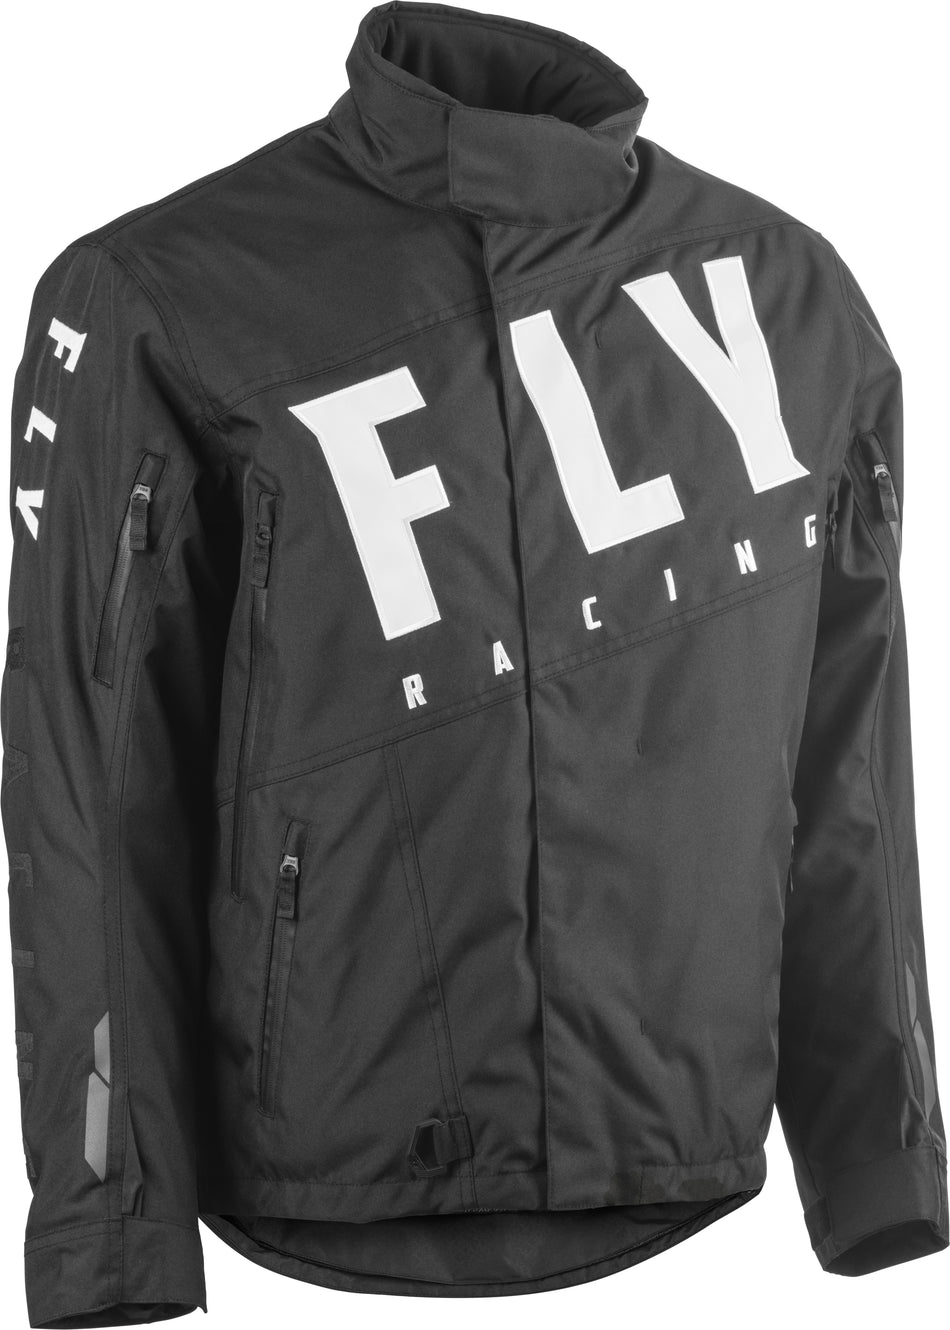 FLY RACING Fly Snx Pro Jacket Black Xl 470-4110X